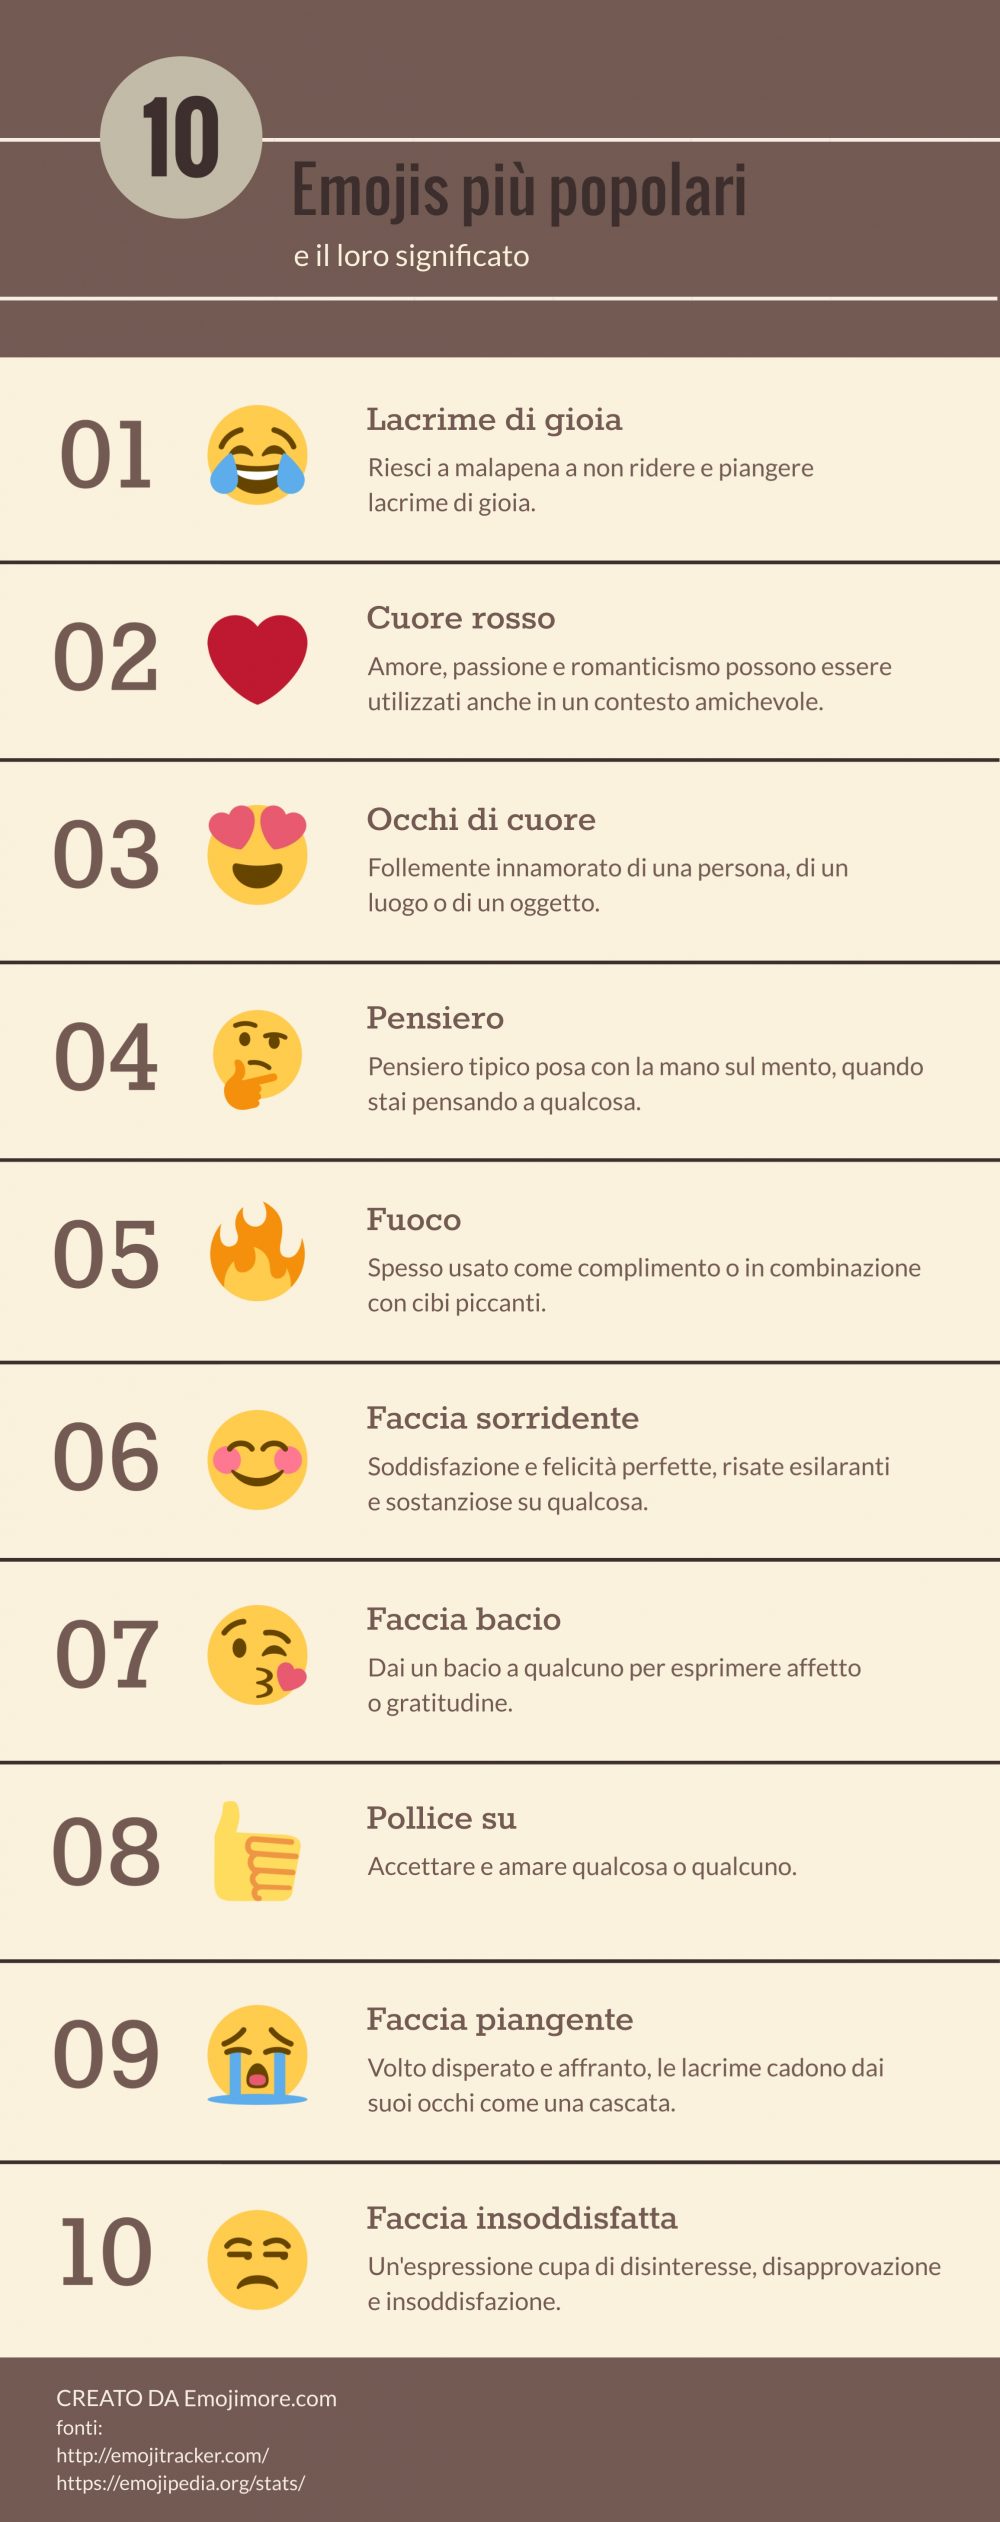 10 Emojis piu popolari infografica